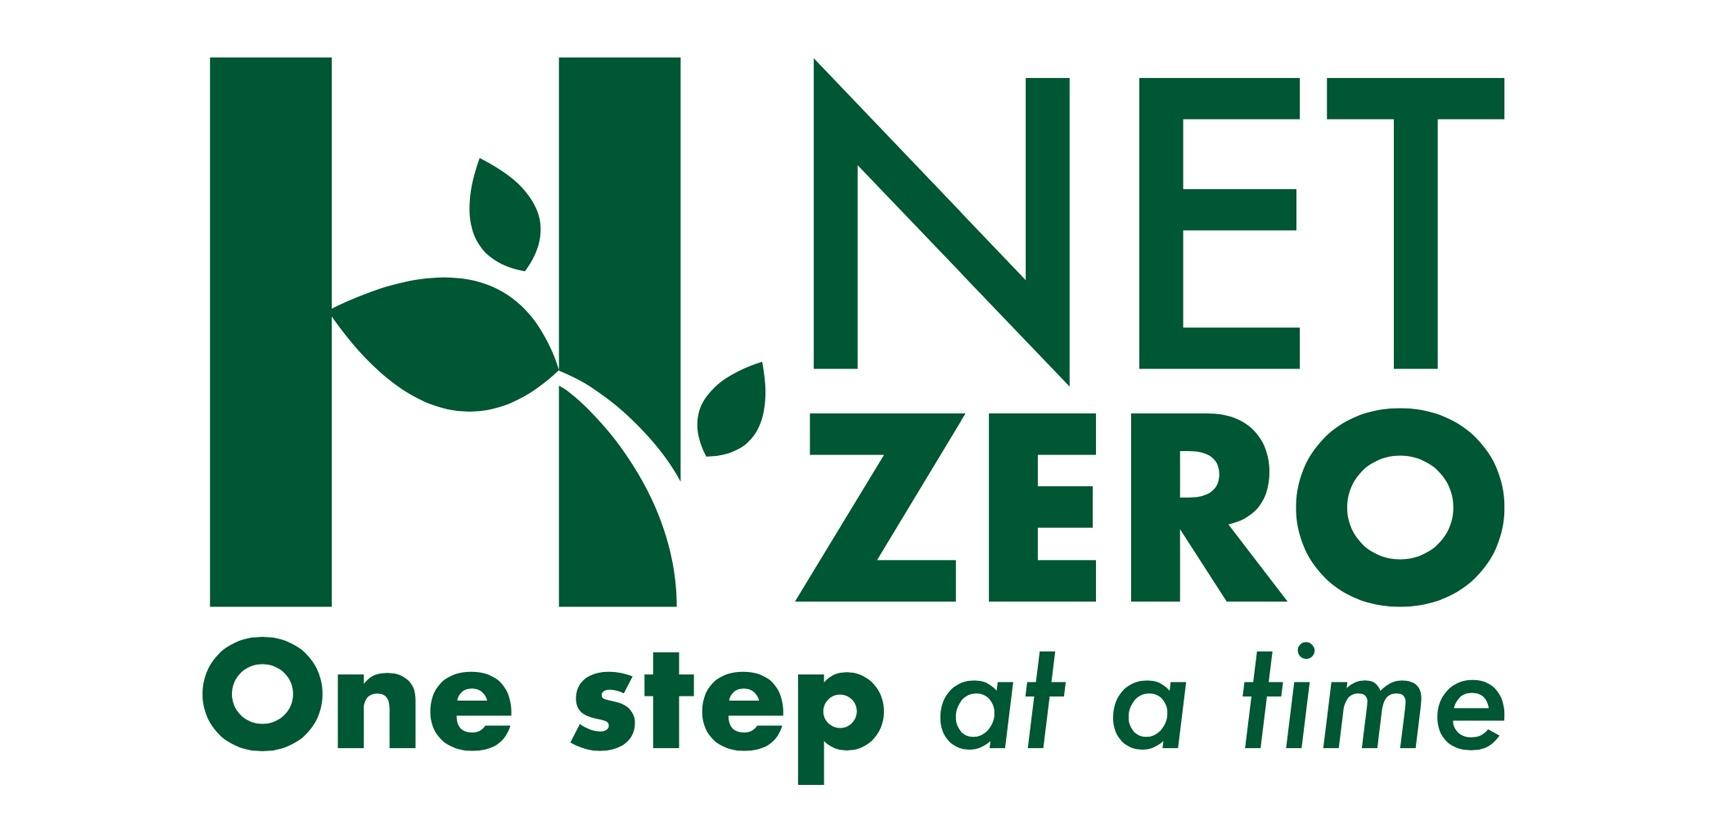 Hadlow net zero logo